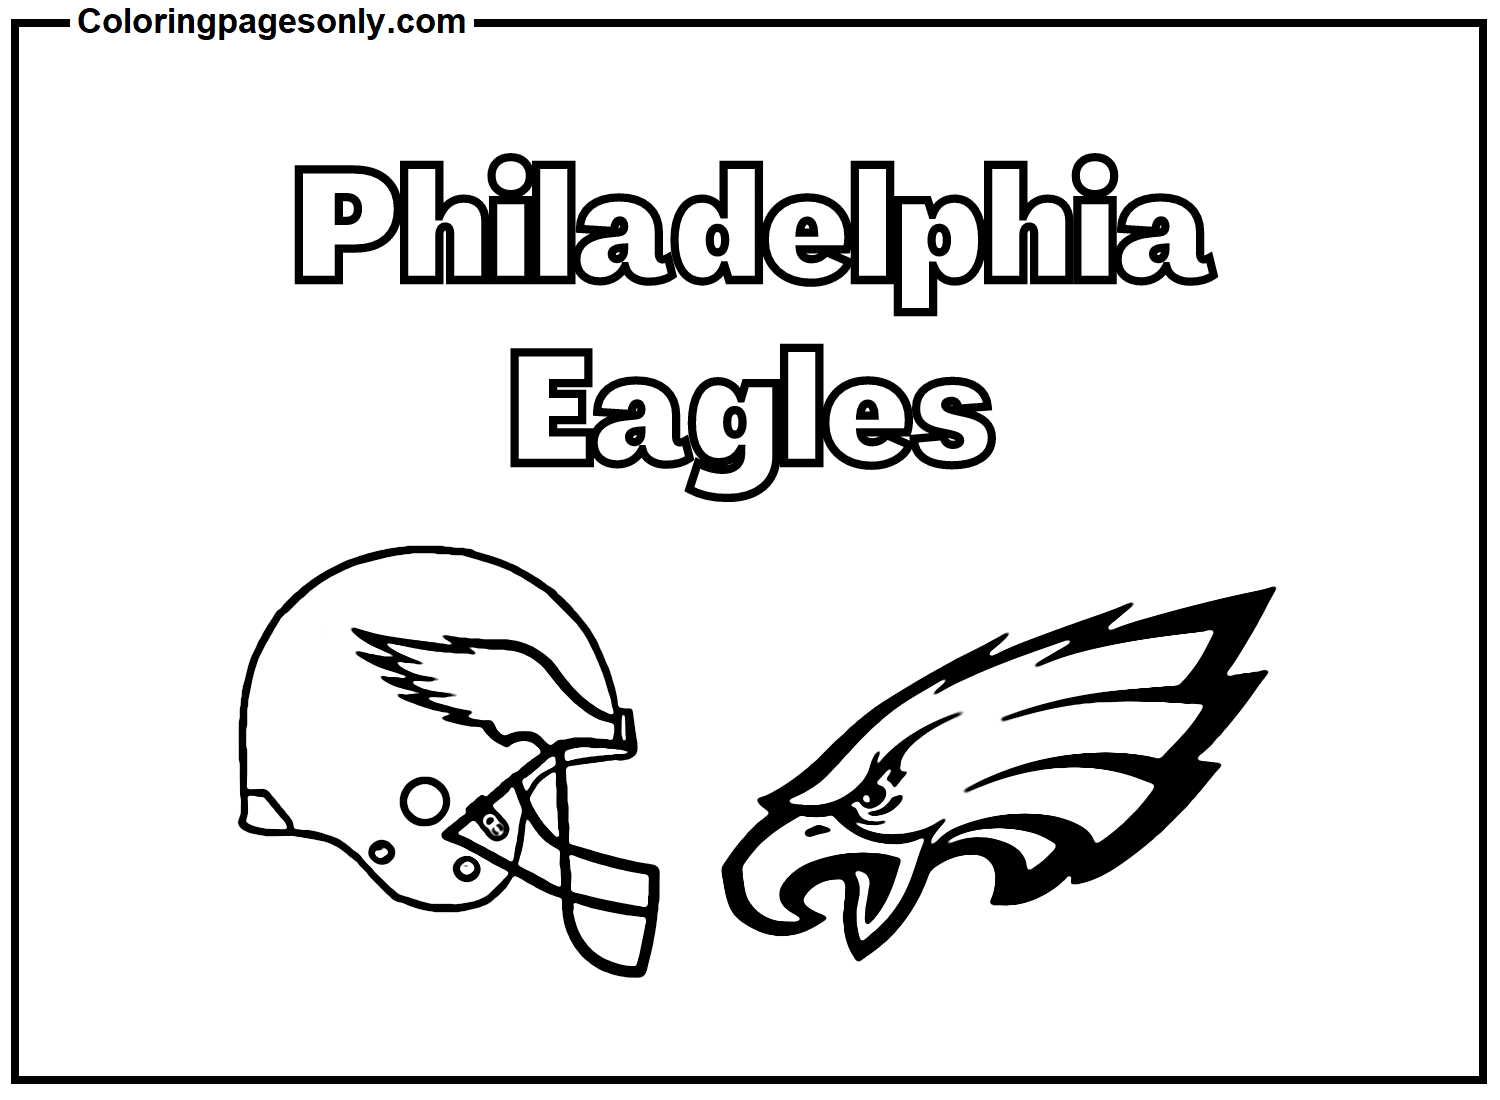 Philadelphia eagles team coloring page